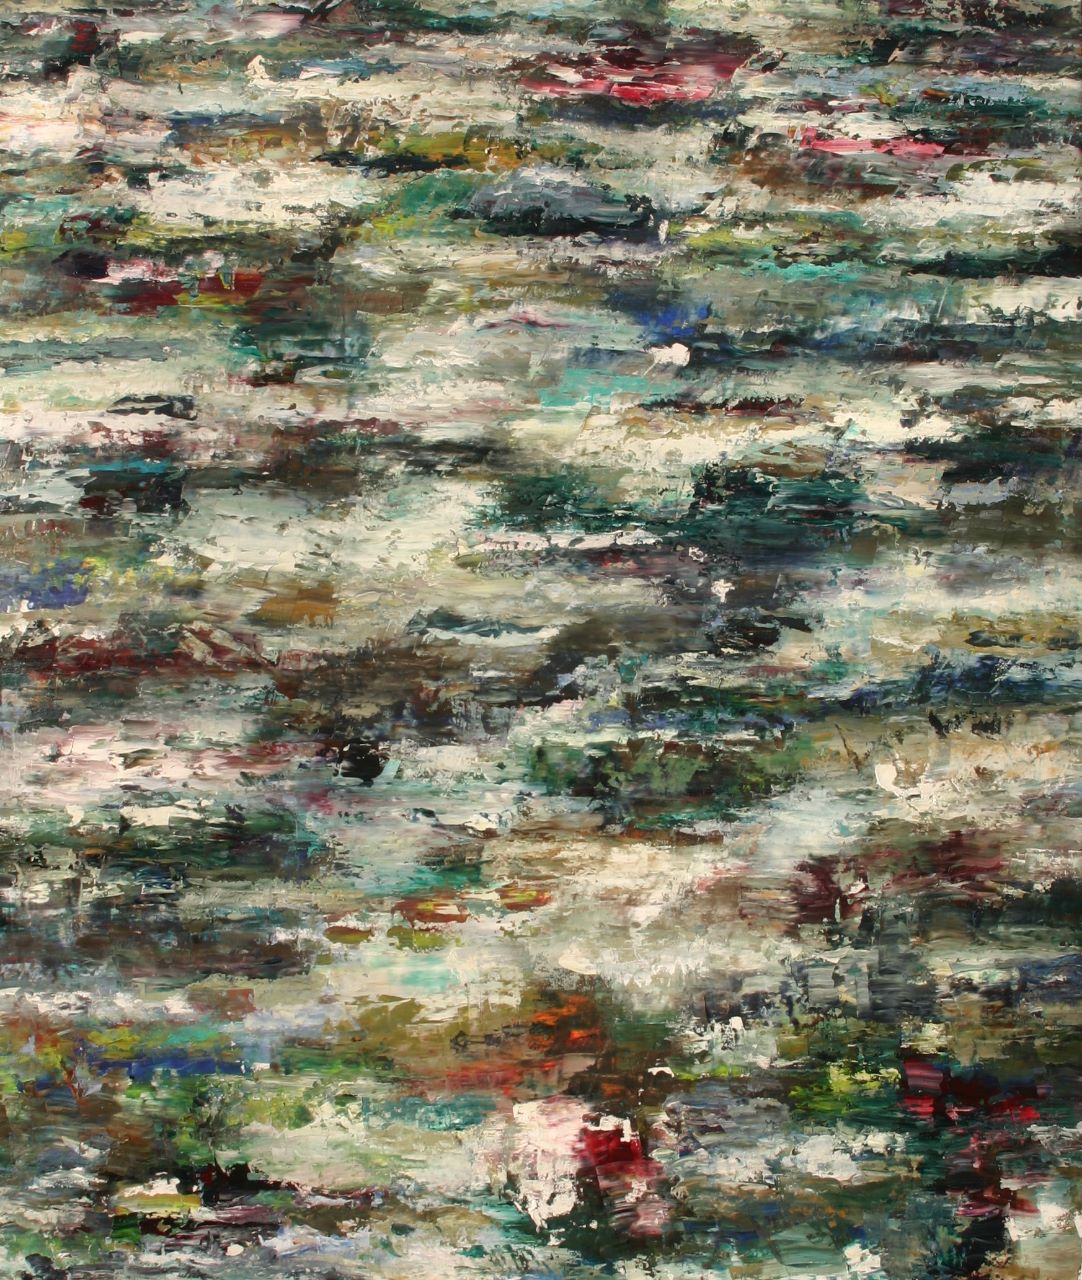 Rudi Weiss, Fluss, 4-2016, Öl auf Leinwand, 145 cm x 120 cm, wer020ko